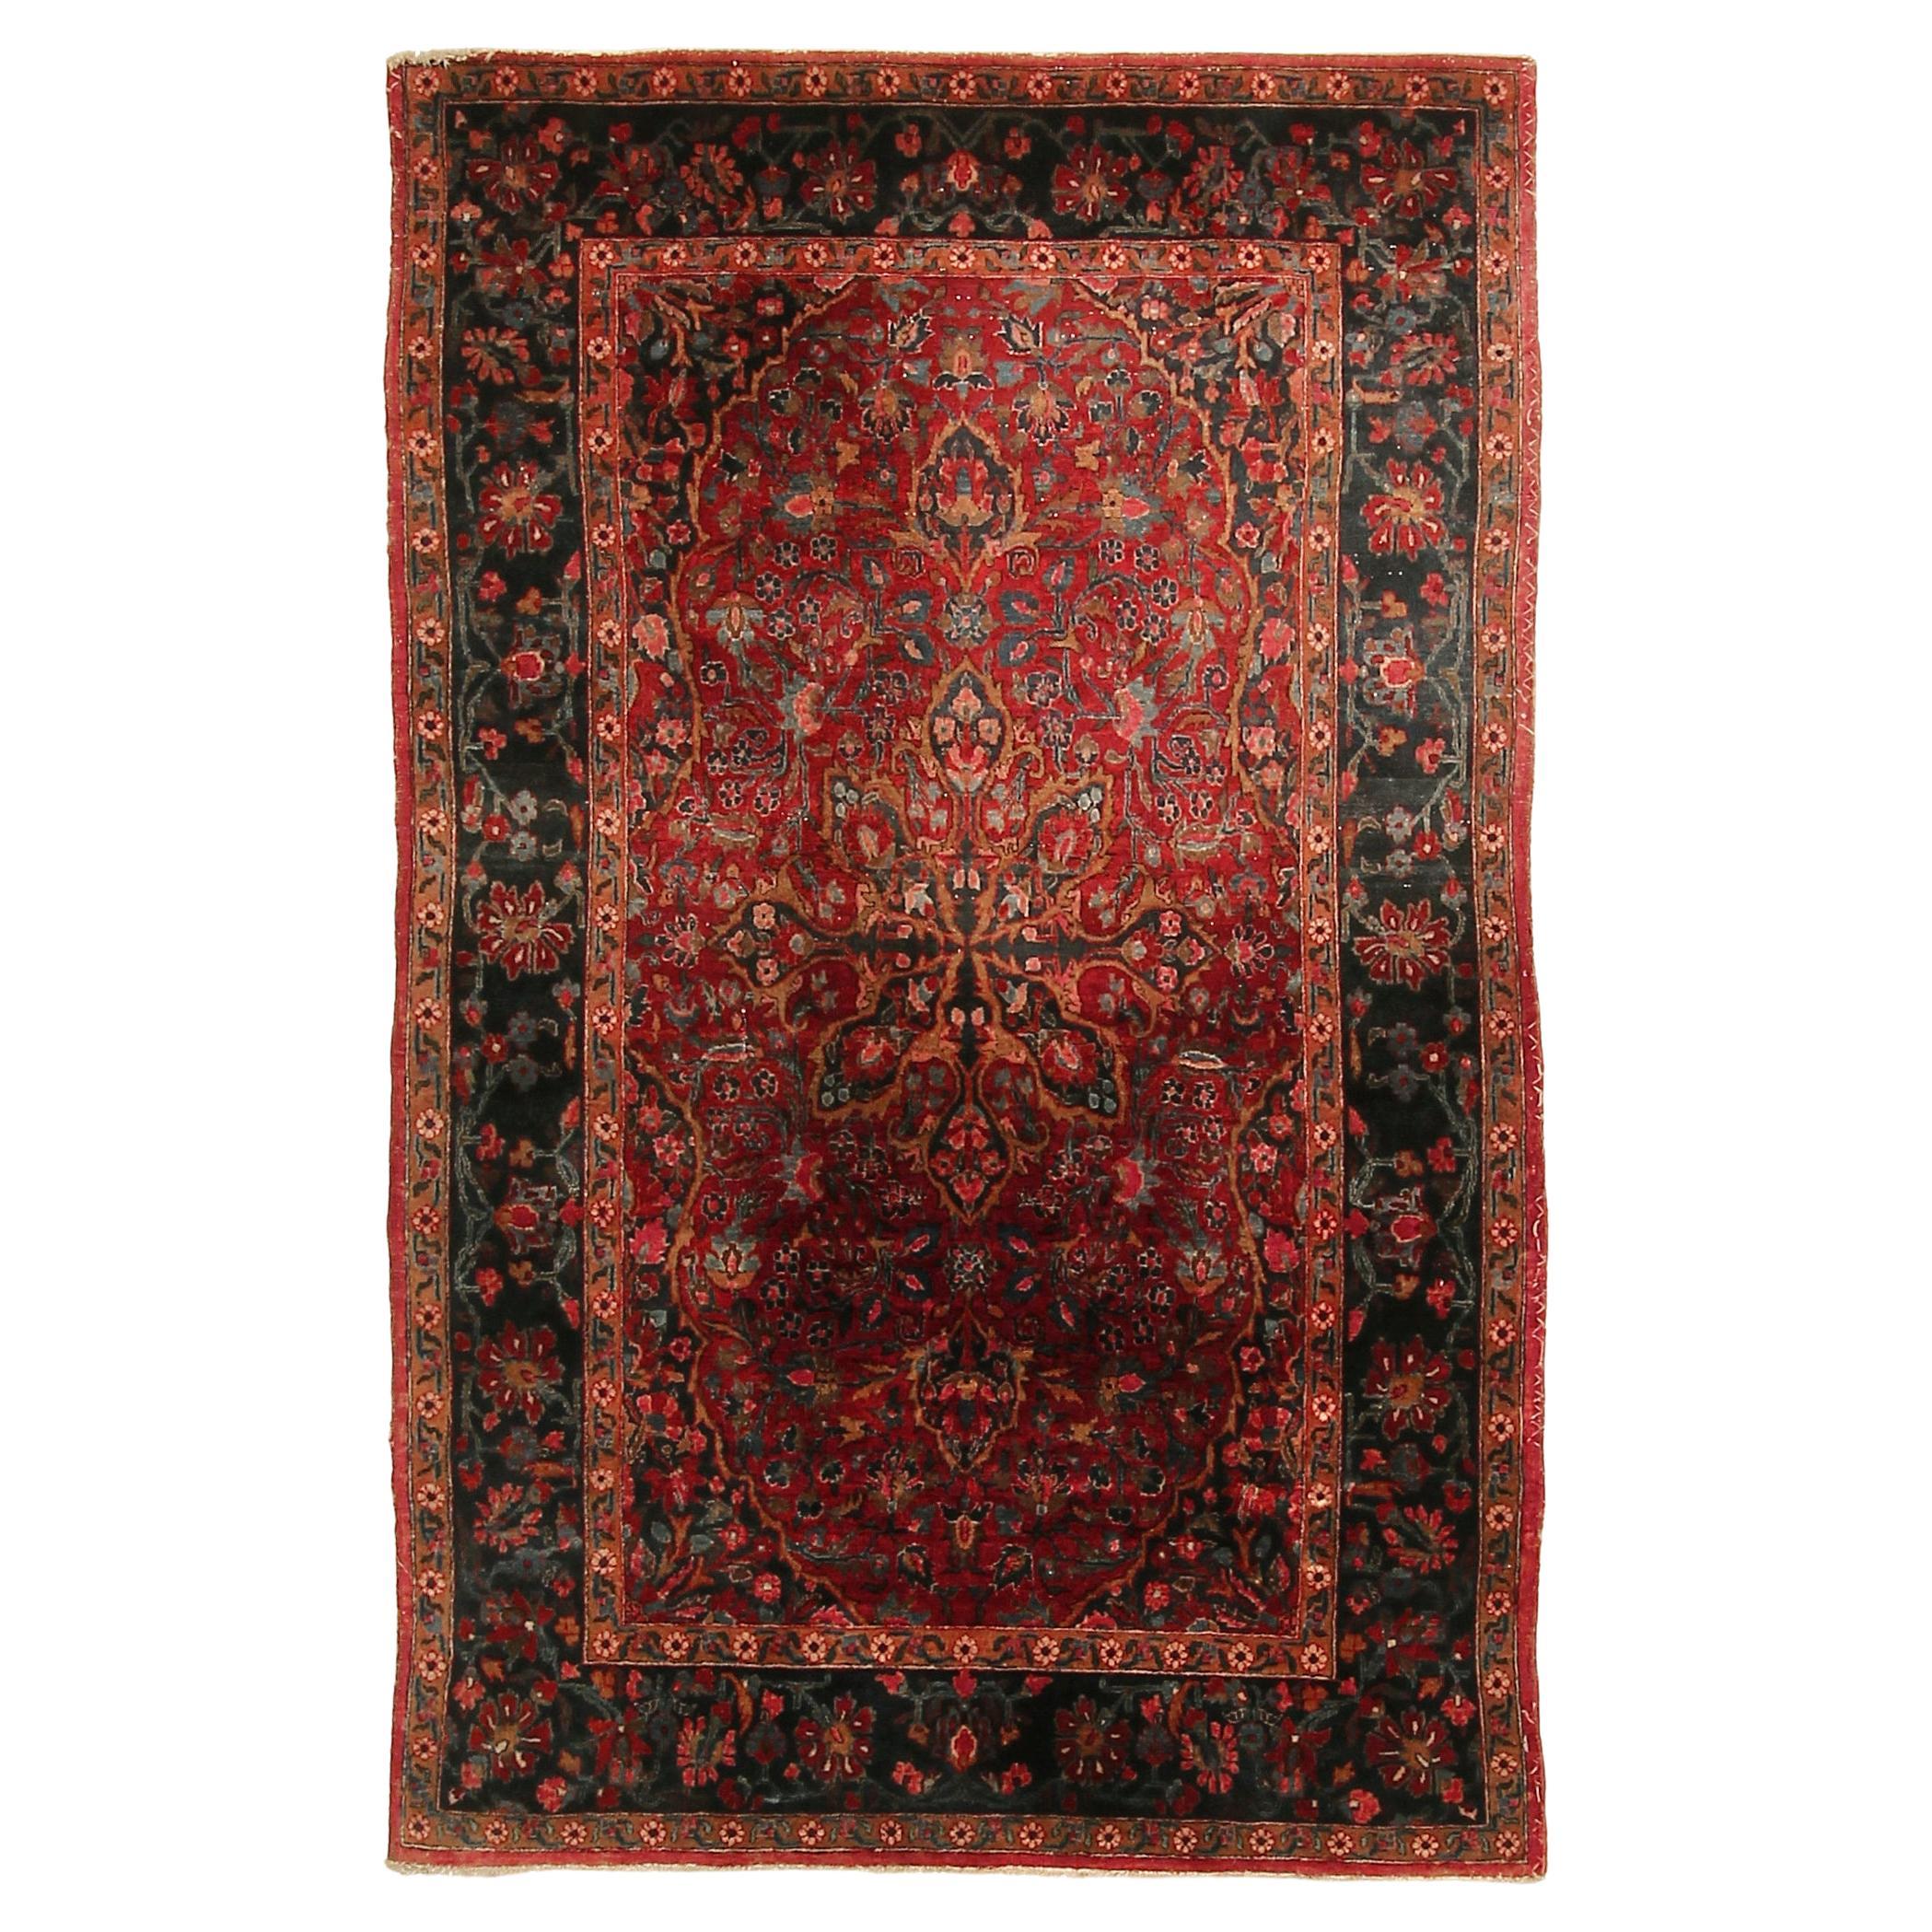 Antiker Manchester Kashan-Teppich Antiker persischer Kashan-Teppich Persischer Teppich 1880